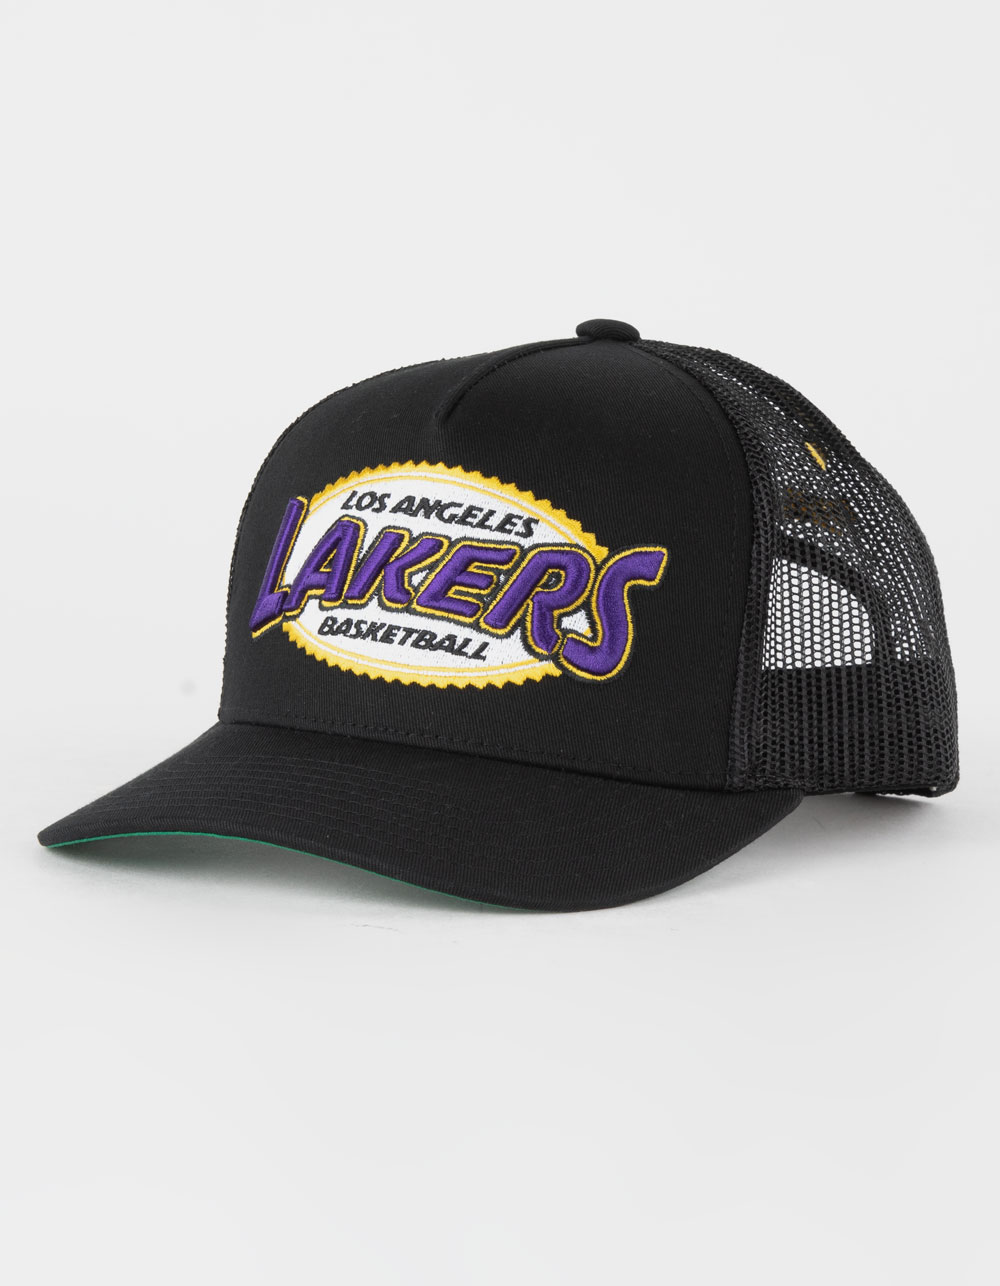 NBA Los Angeles Lakers Adidas Cap Adult Sz S/M Flex Fit Pro Shape Hat NWT